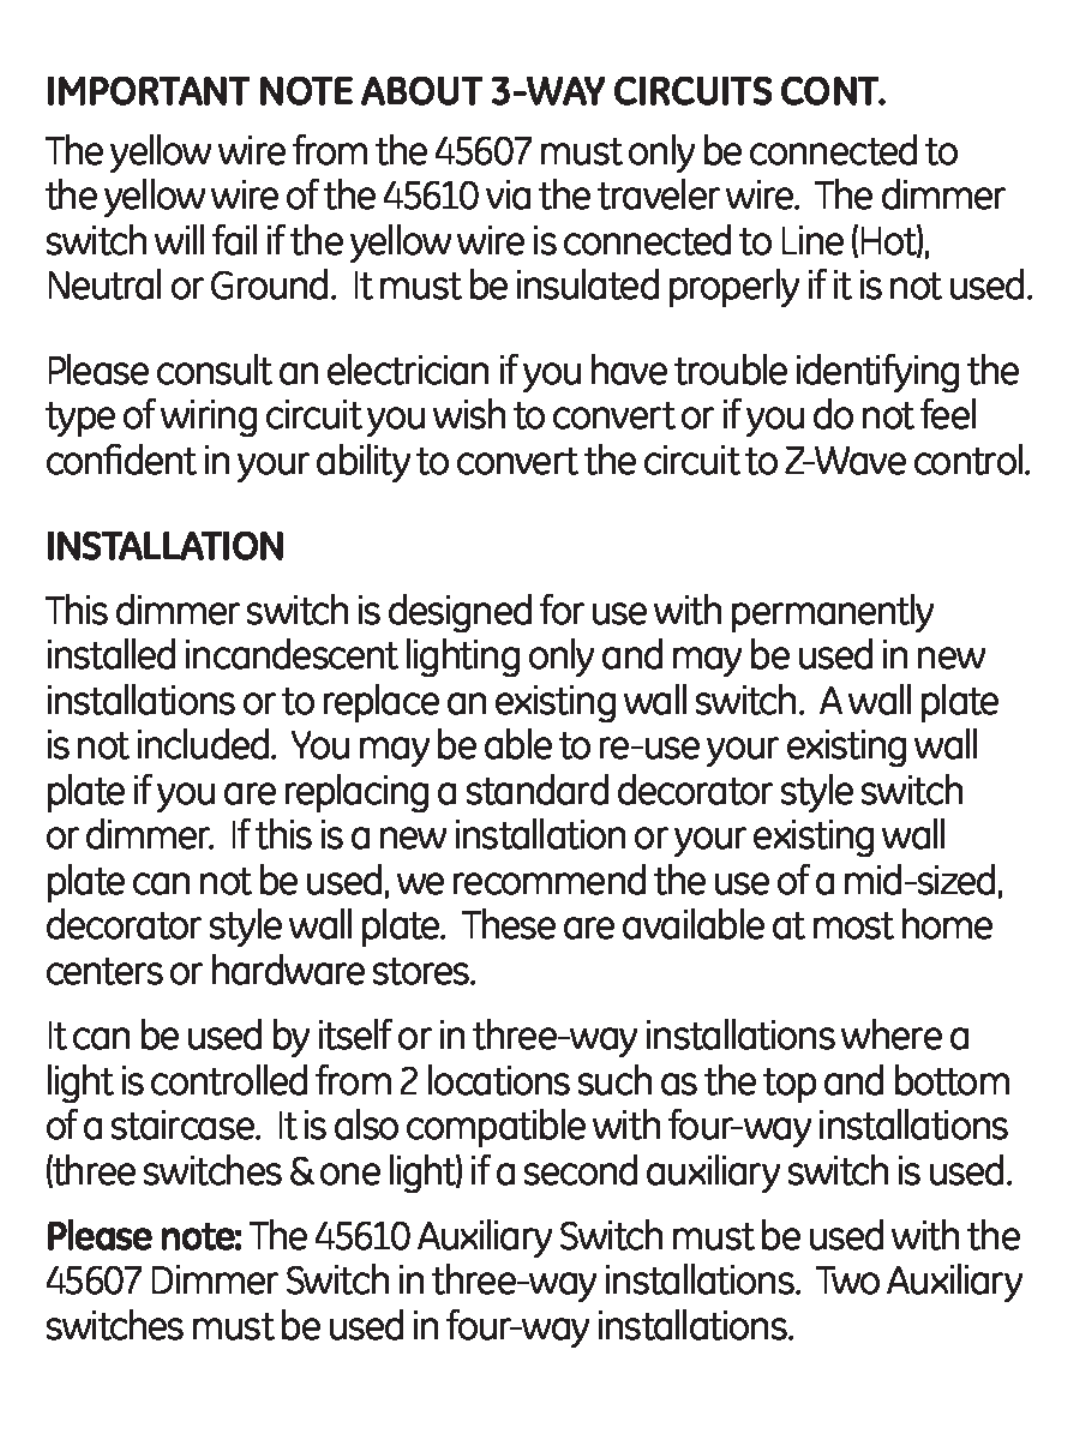 Jasco ZWAVEKIT manual IMPORTANT NOTE ABOUT 3-WAYCIRCUITS CONT, Installation 